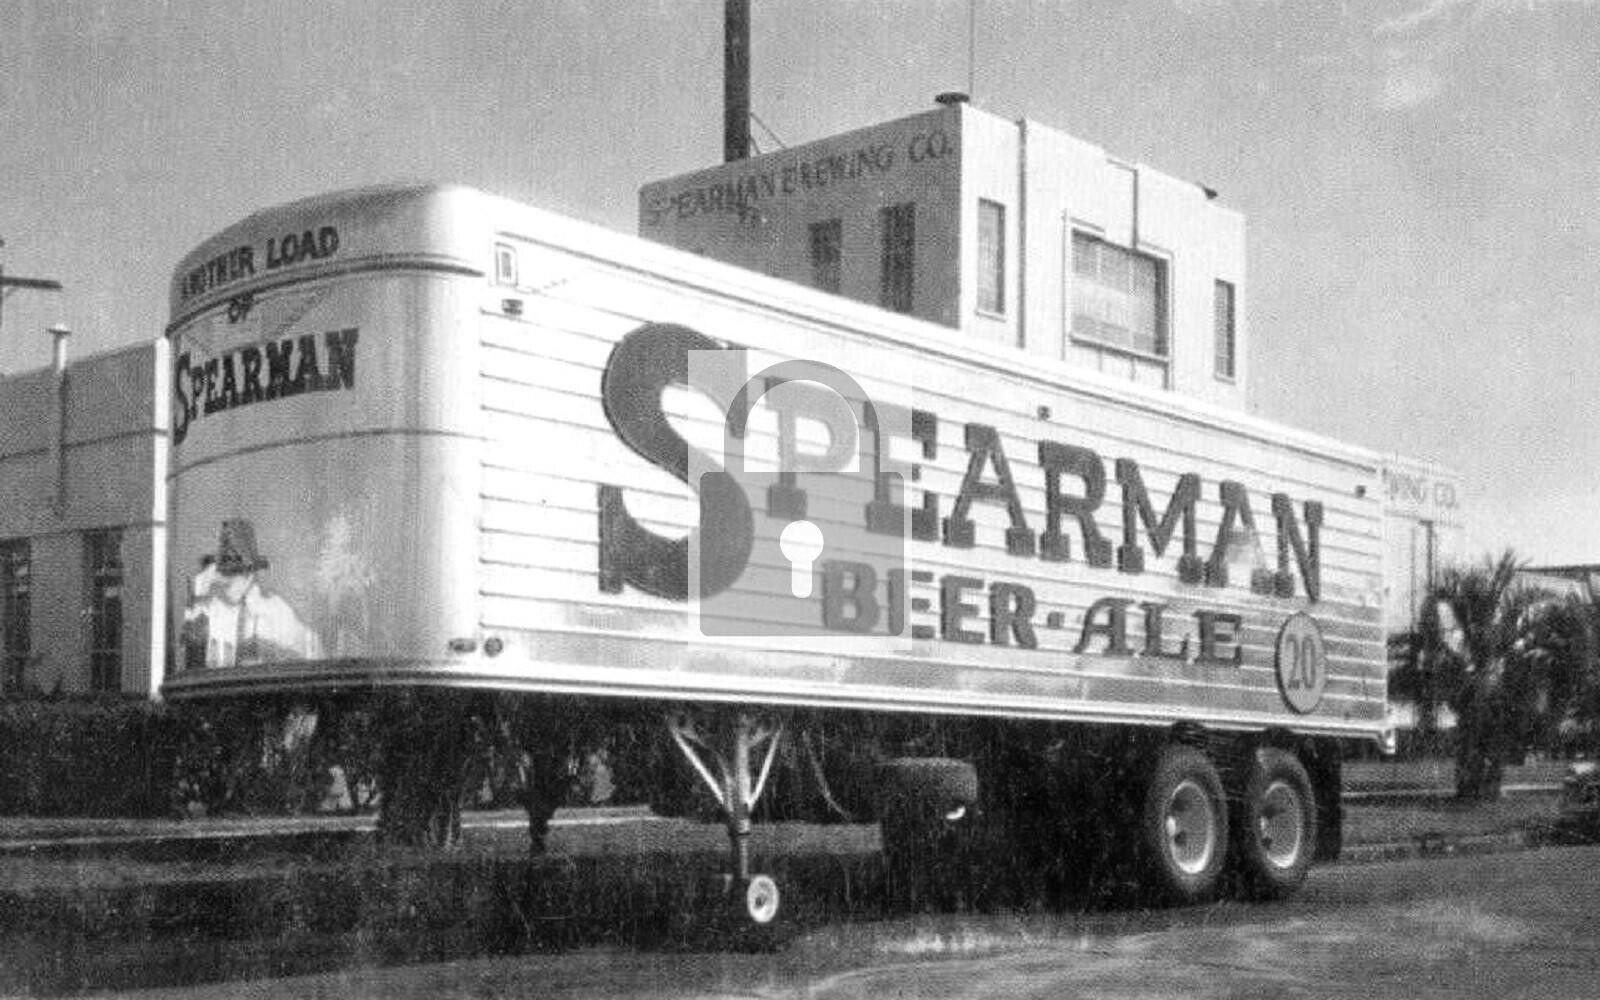 Spearman Beer Brewing Company Factory Pensacola Florida FL - 8x10 PRINT